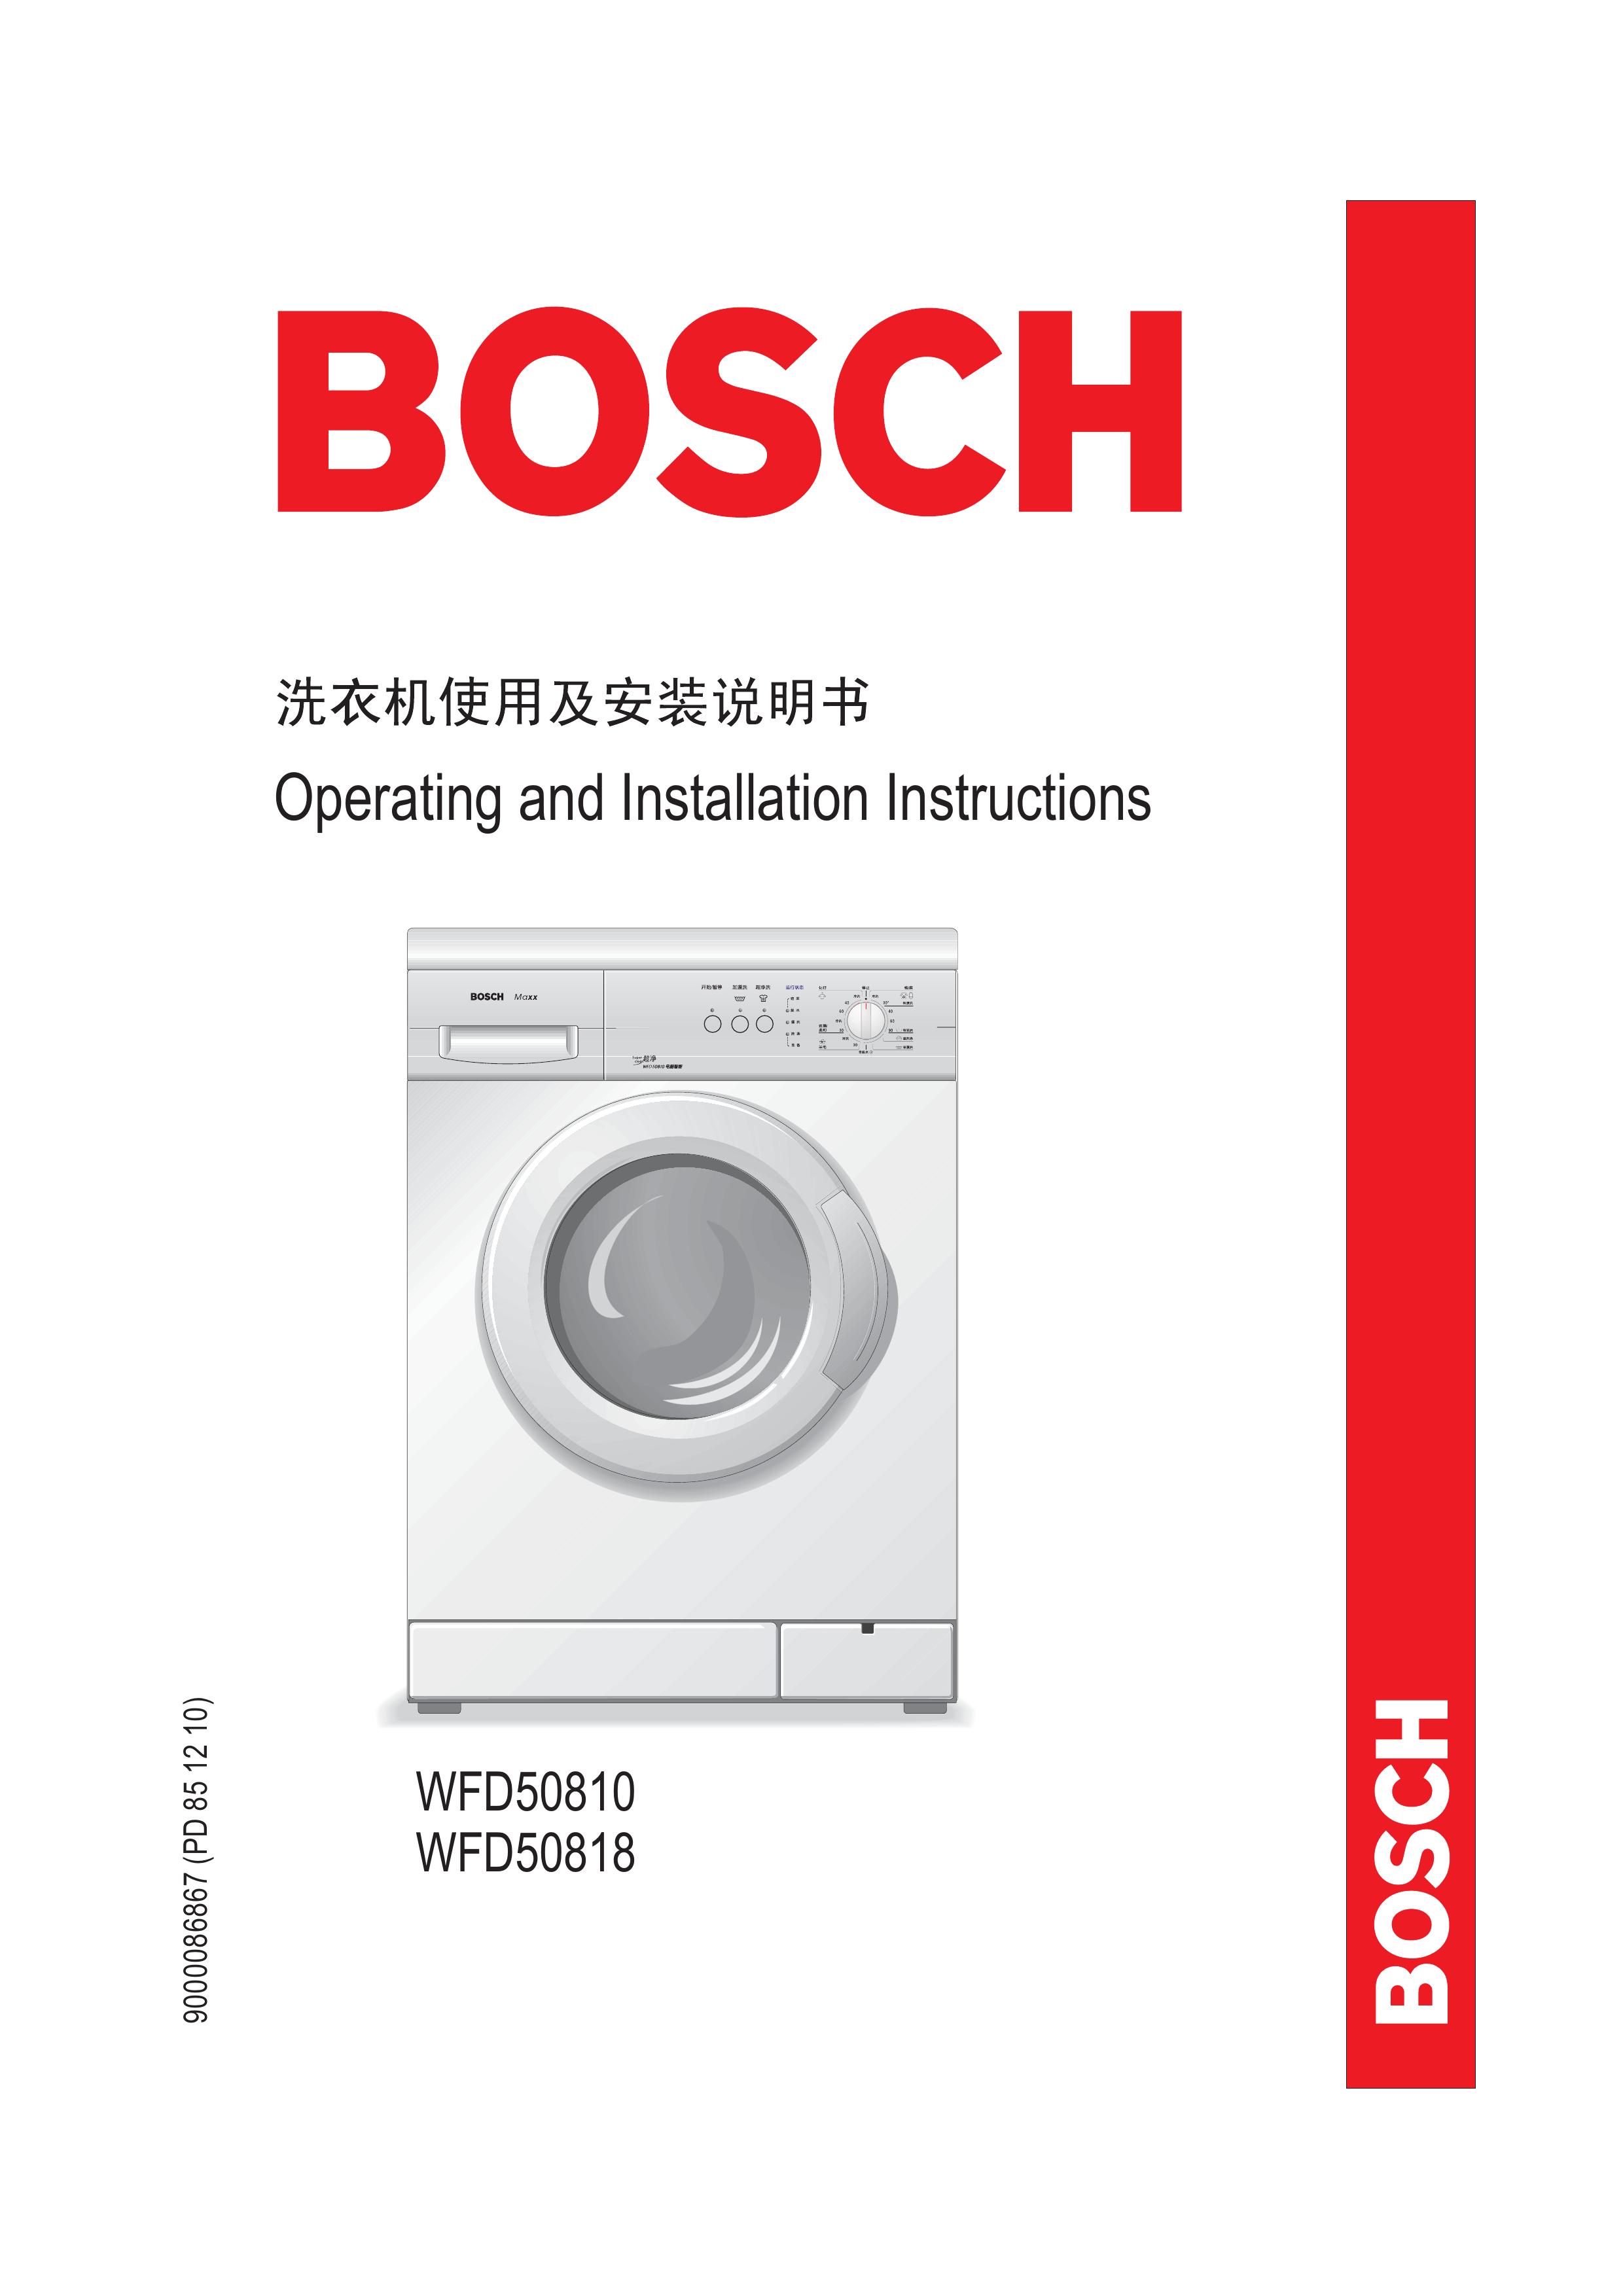 Bosch Appliances WFD50818 Washer User Manual